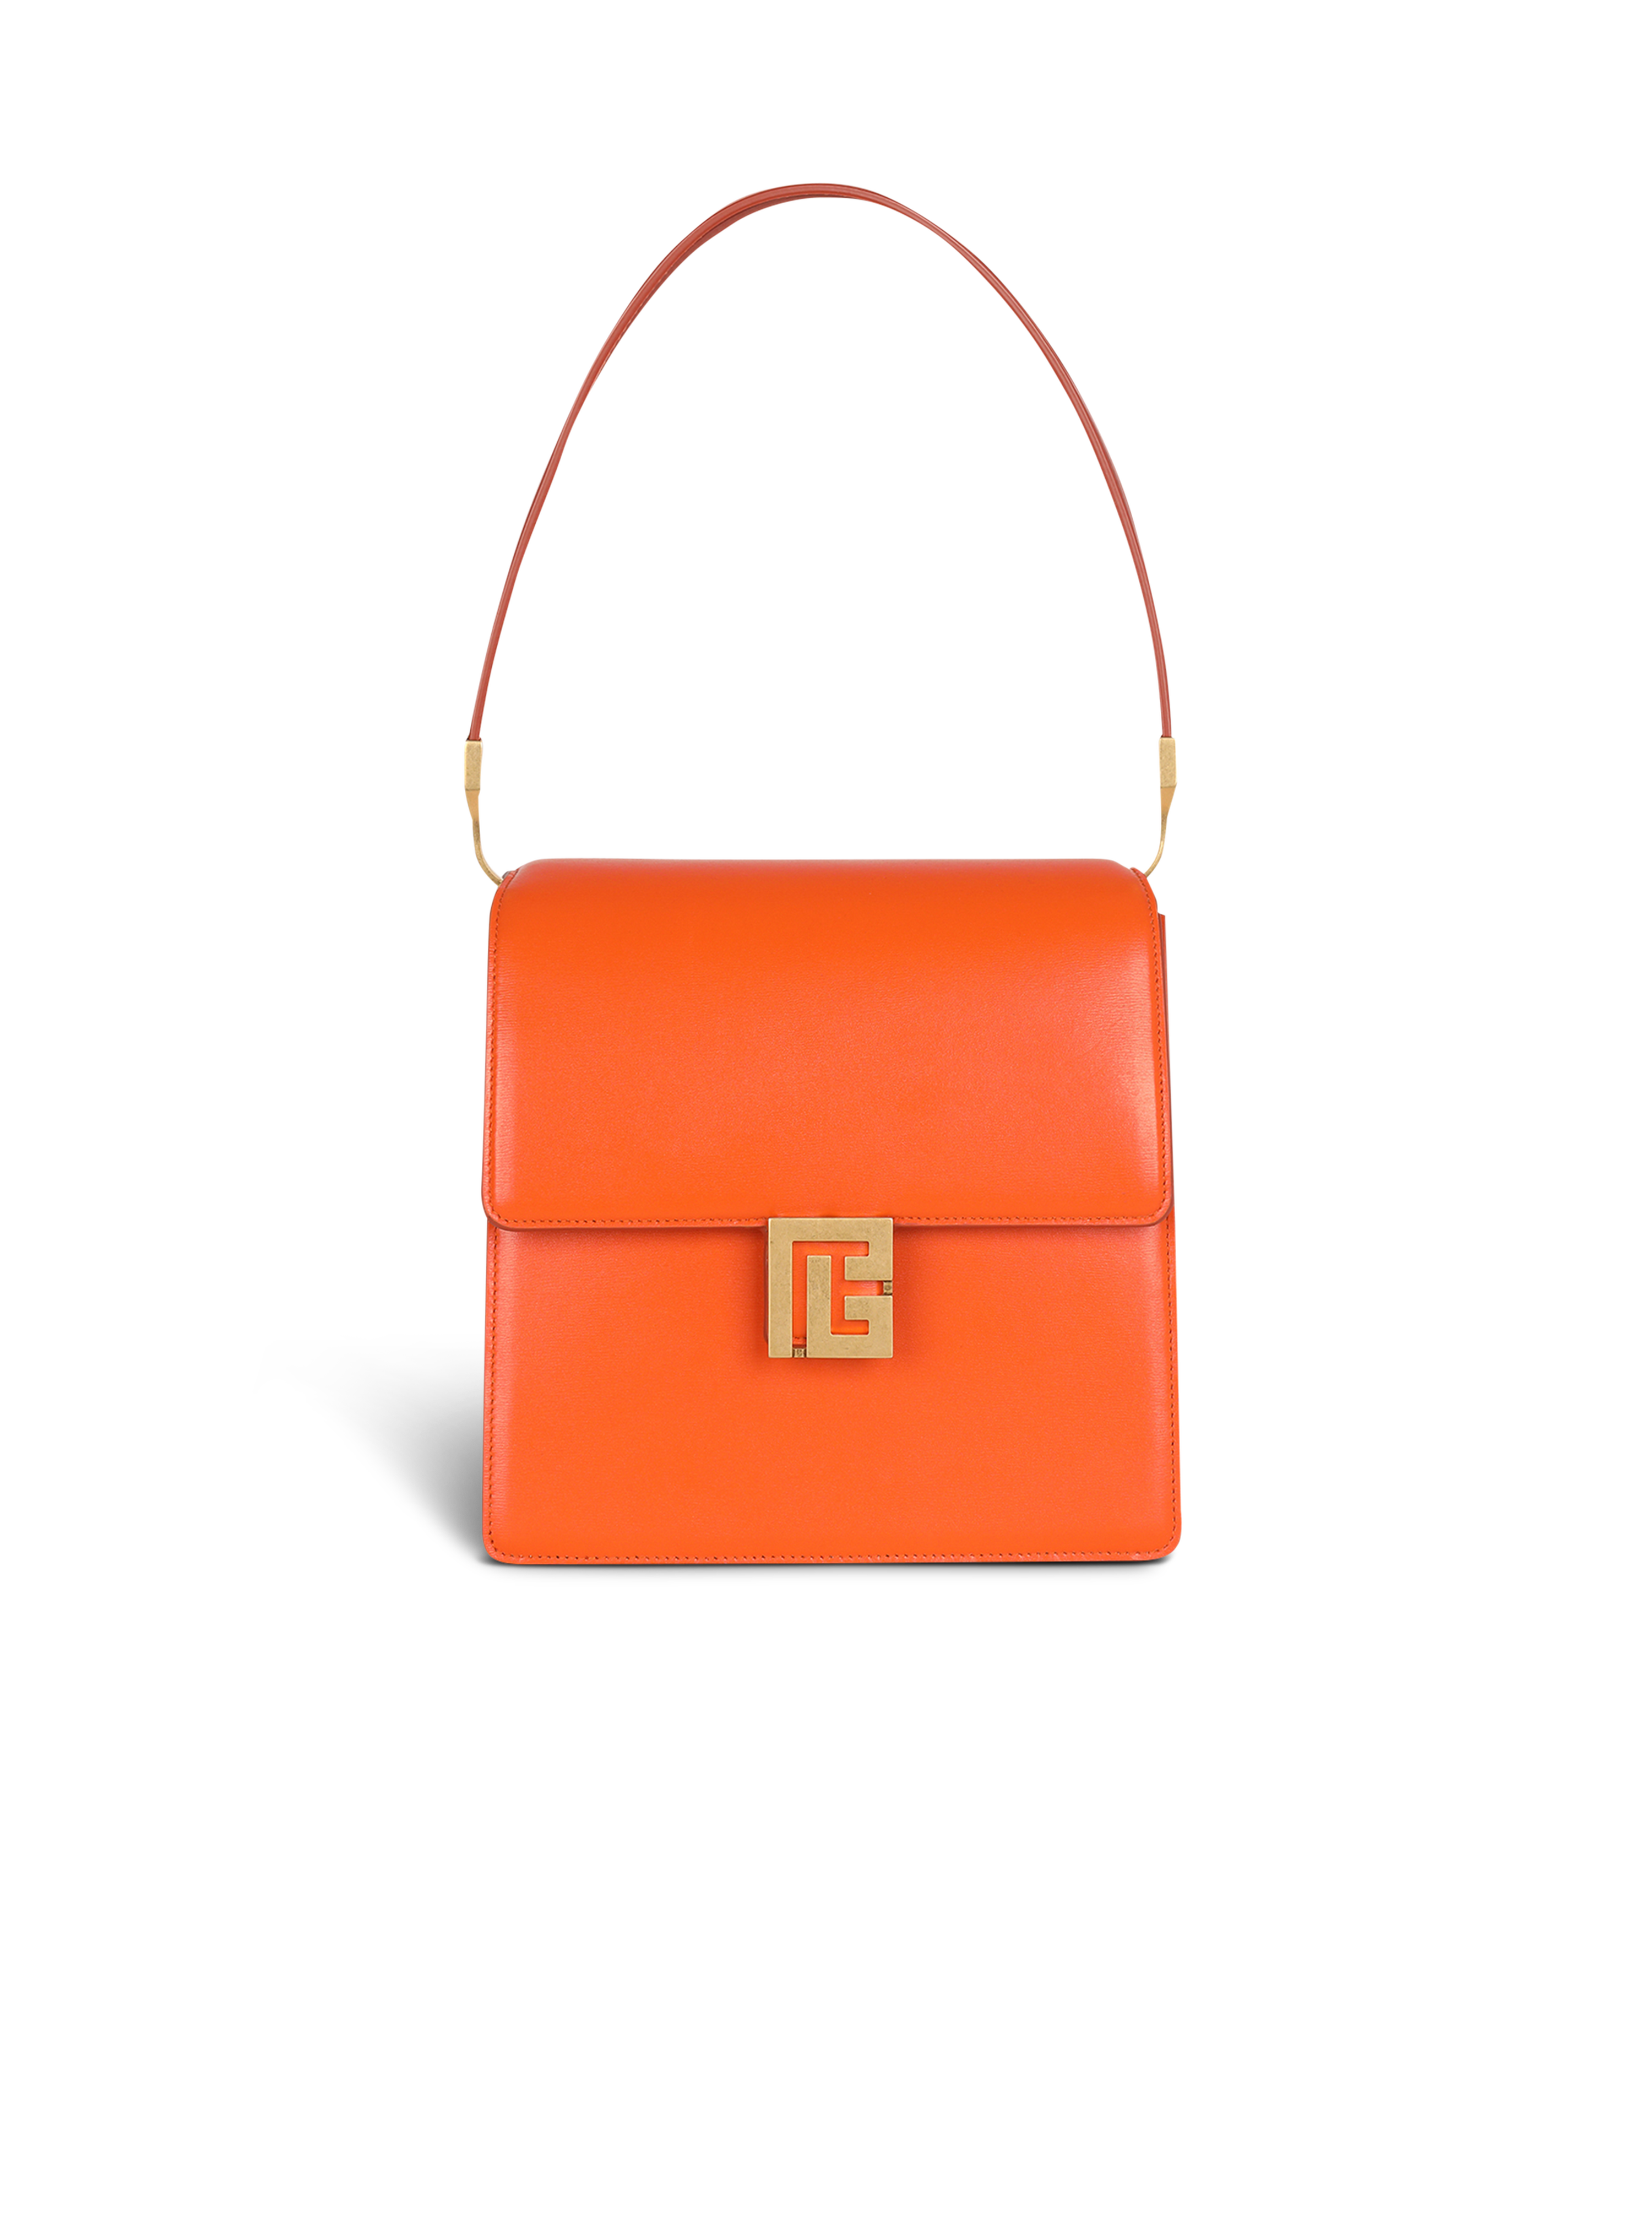 Smooth leather Ely bag, orange